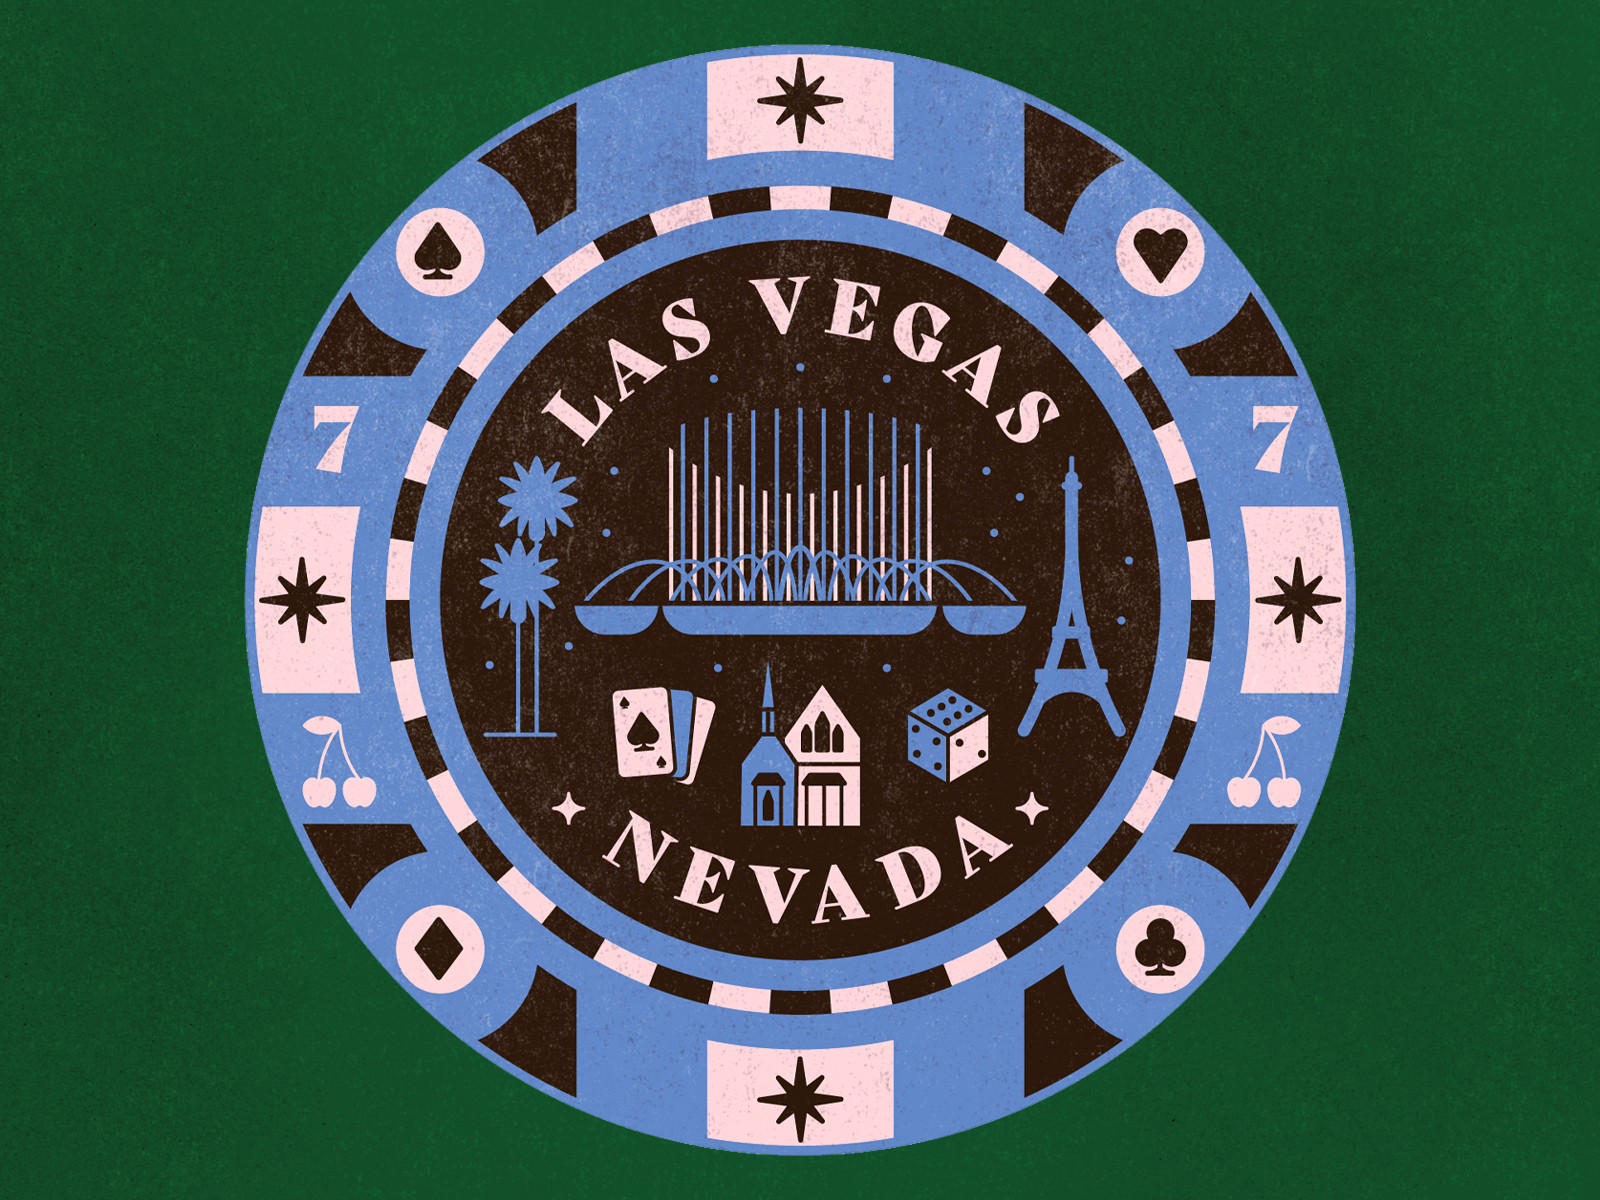 Road Trip cards dice black jack palm trees roulette poker casino gambling las vegas lettering typography retro graphic vector texture illustration